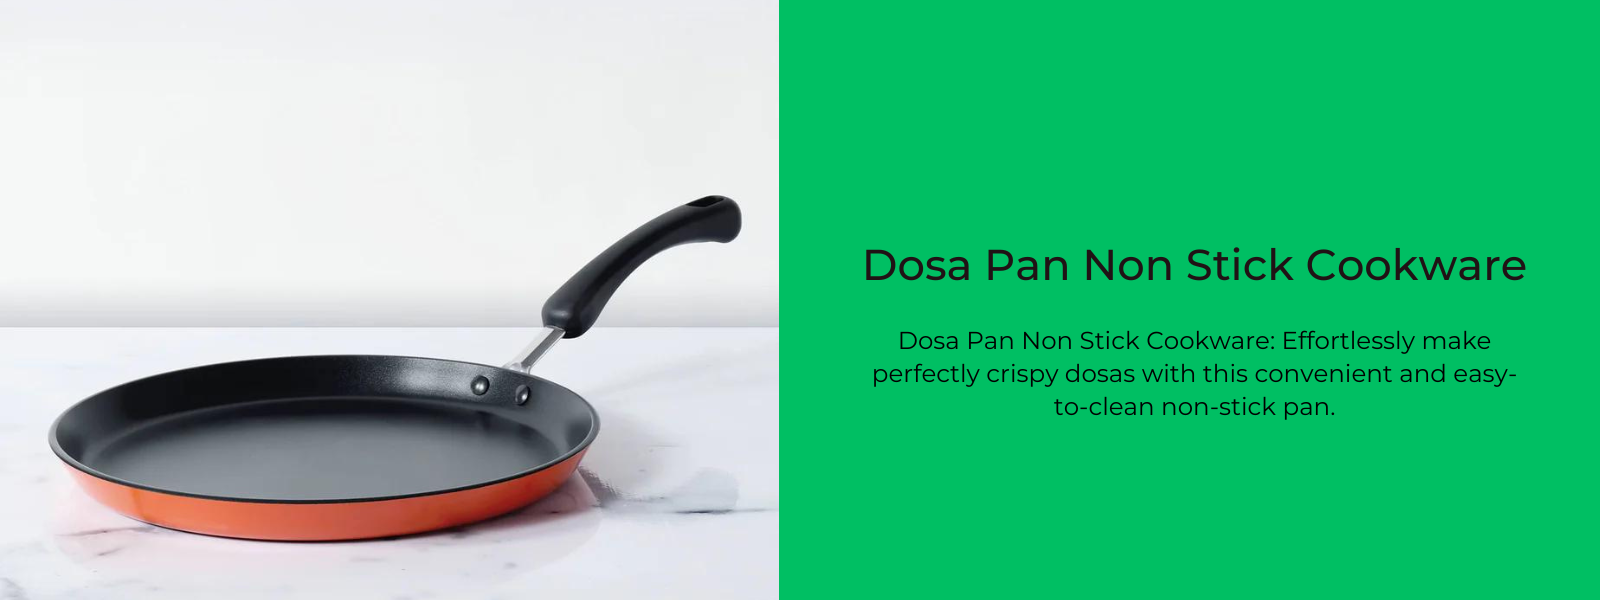 Easy To Use Iron Dosa Tawa With Handle - PotsandPans India